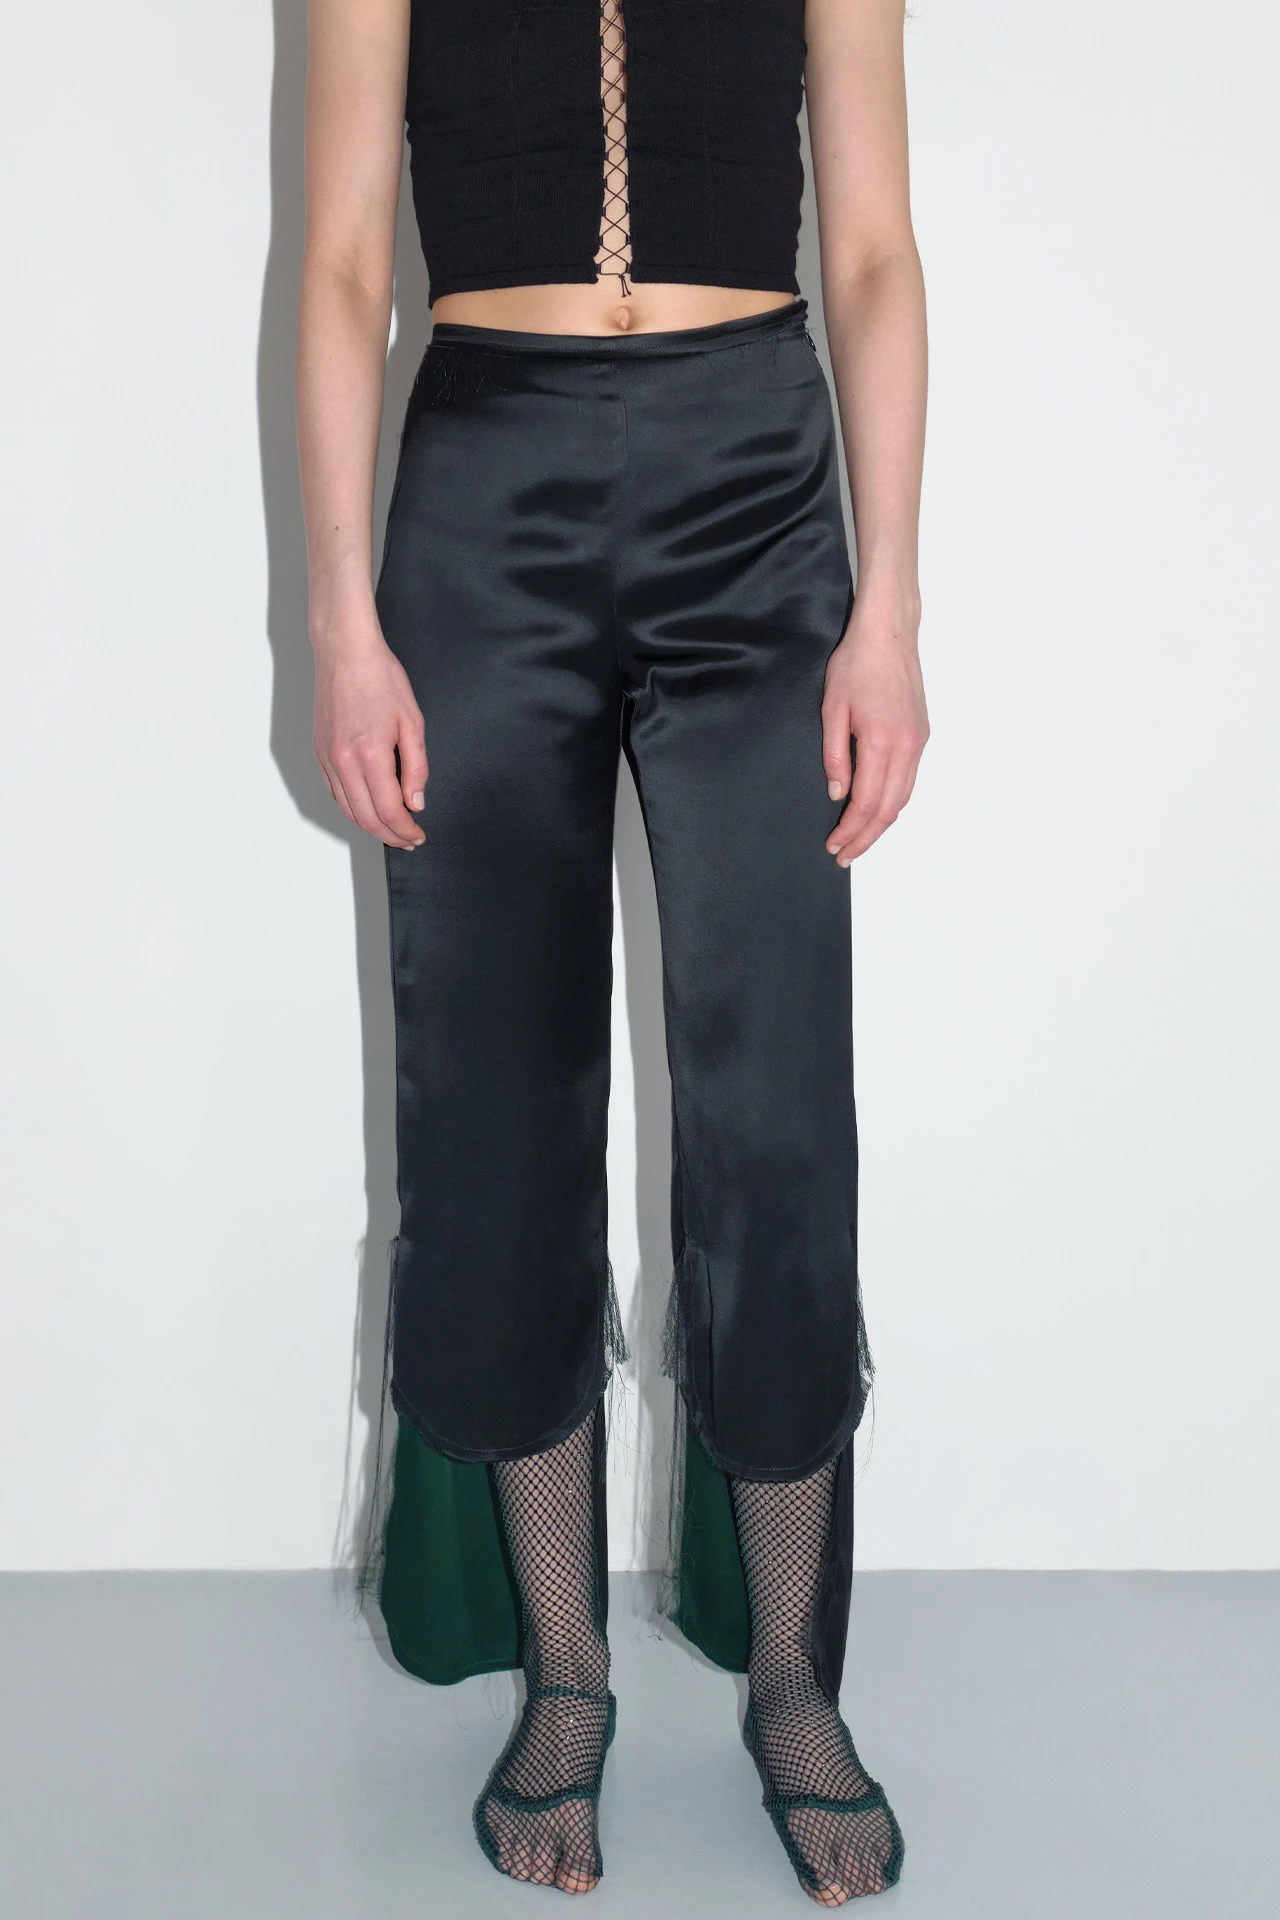 EC-miista-ball-black-forest-trousers-01